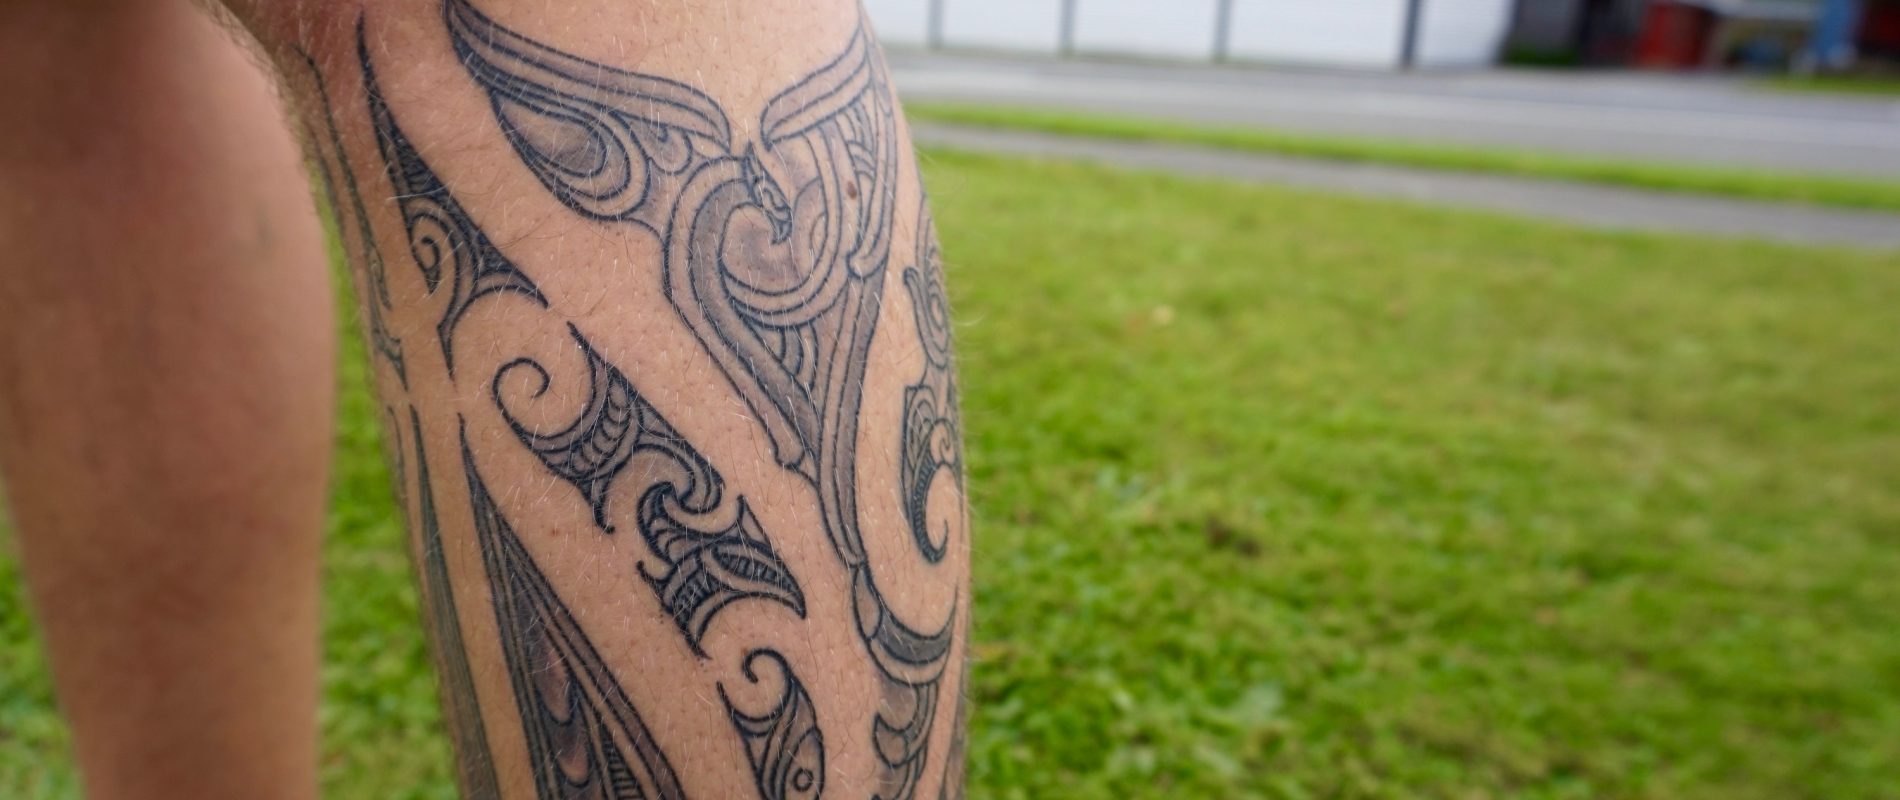 Leg Maori Tattoo - Worldwide Tattoo & Piercing Blog